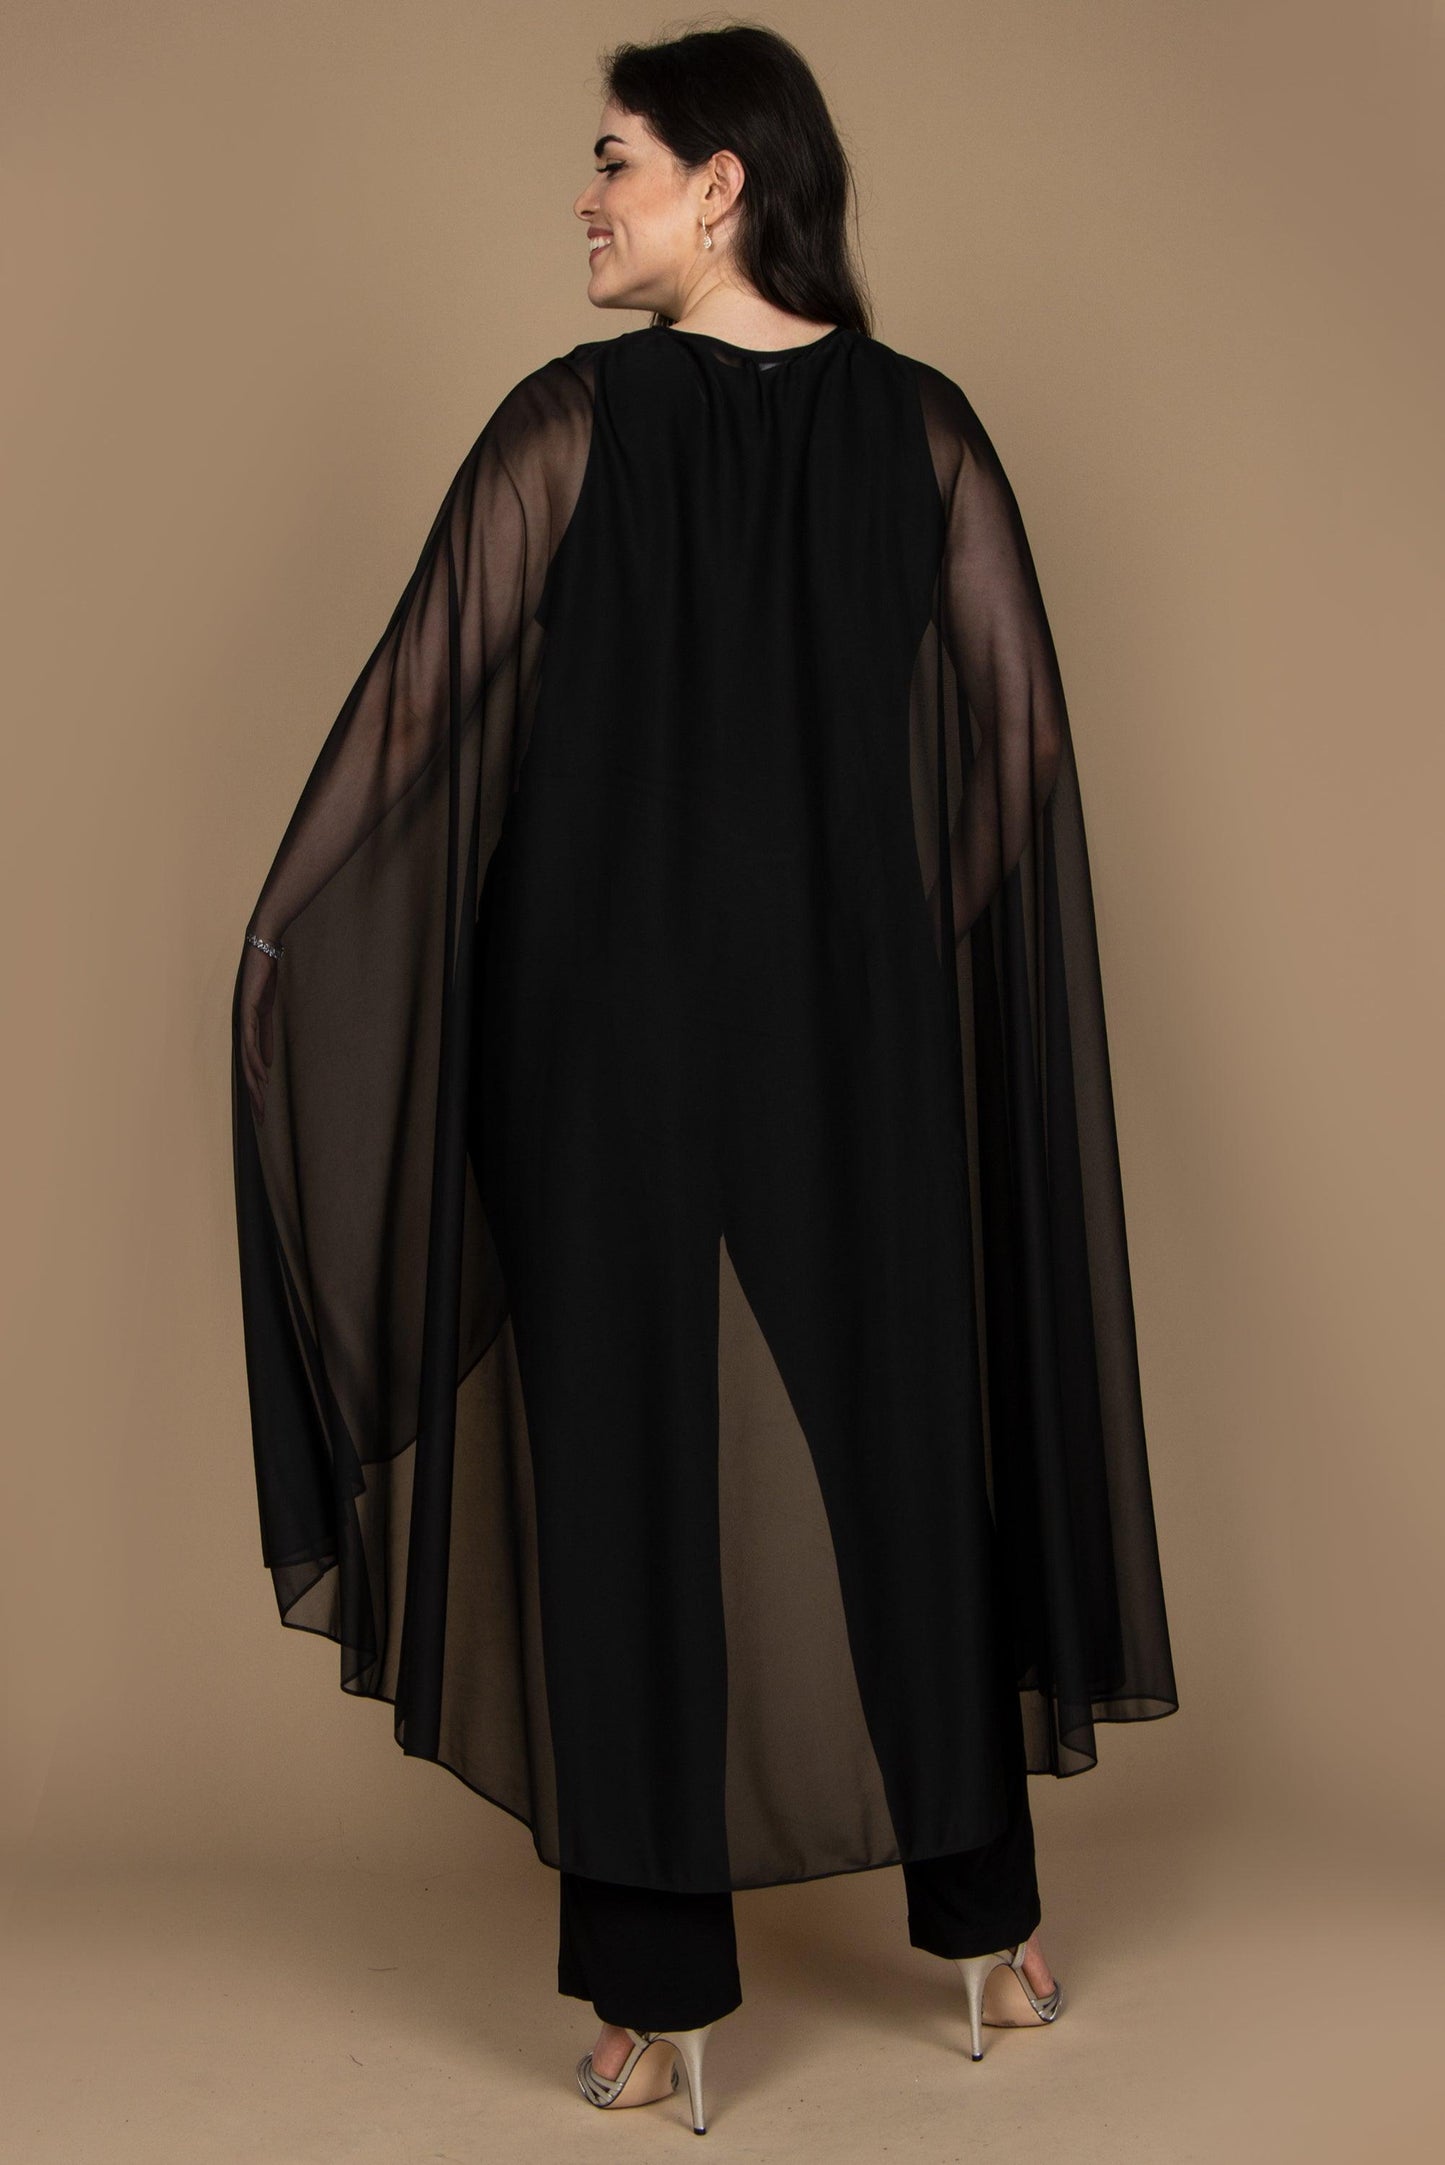 R&M Richards Formal Chiffon Cape Black Jacket 2664W - The Dress Outlet